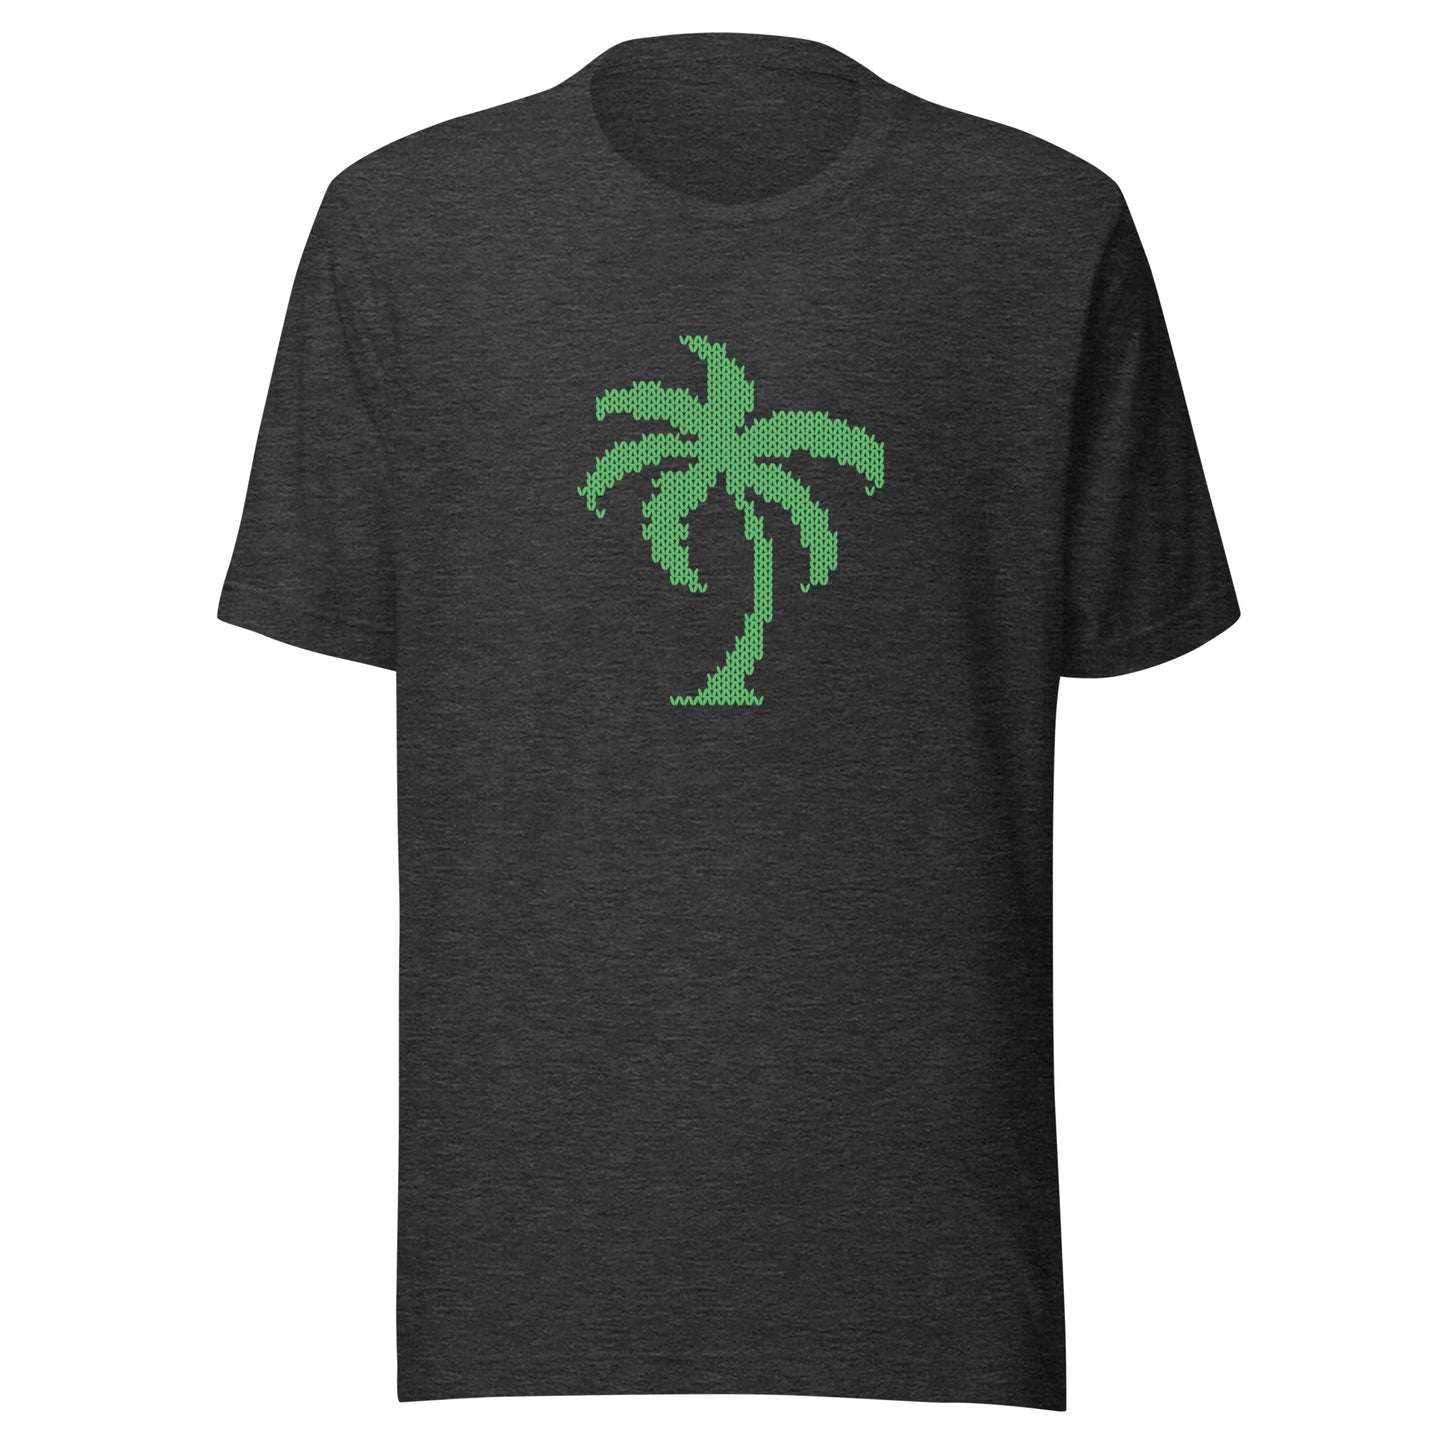 Sommer T-Shirt mit Palme